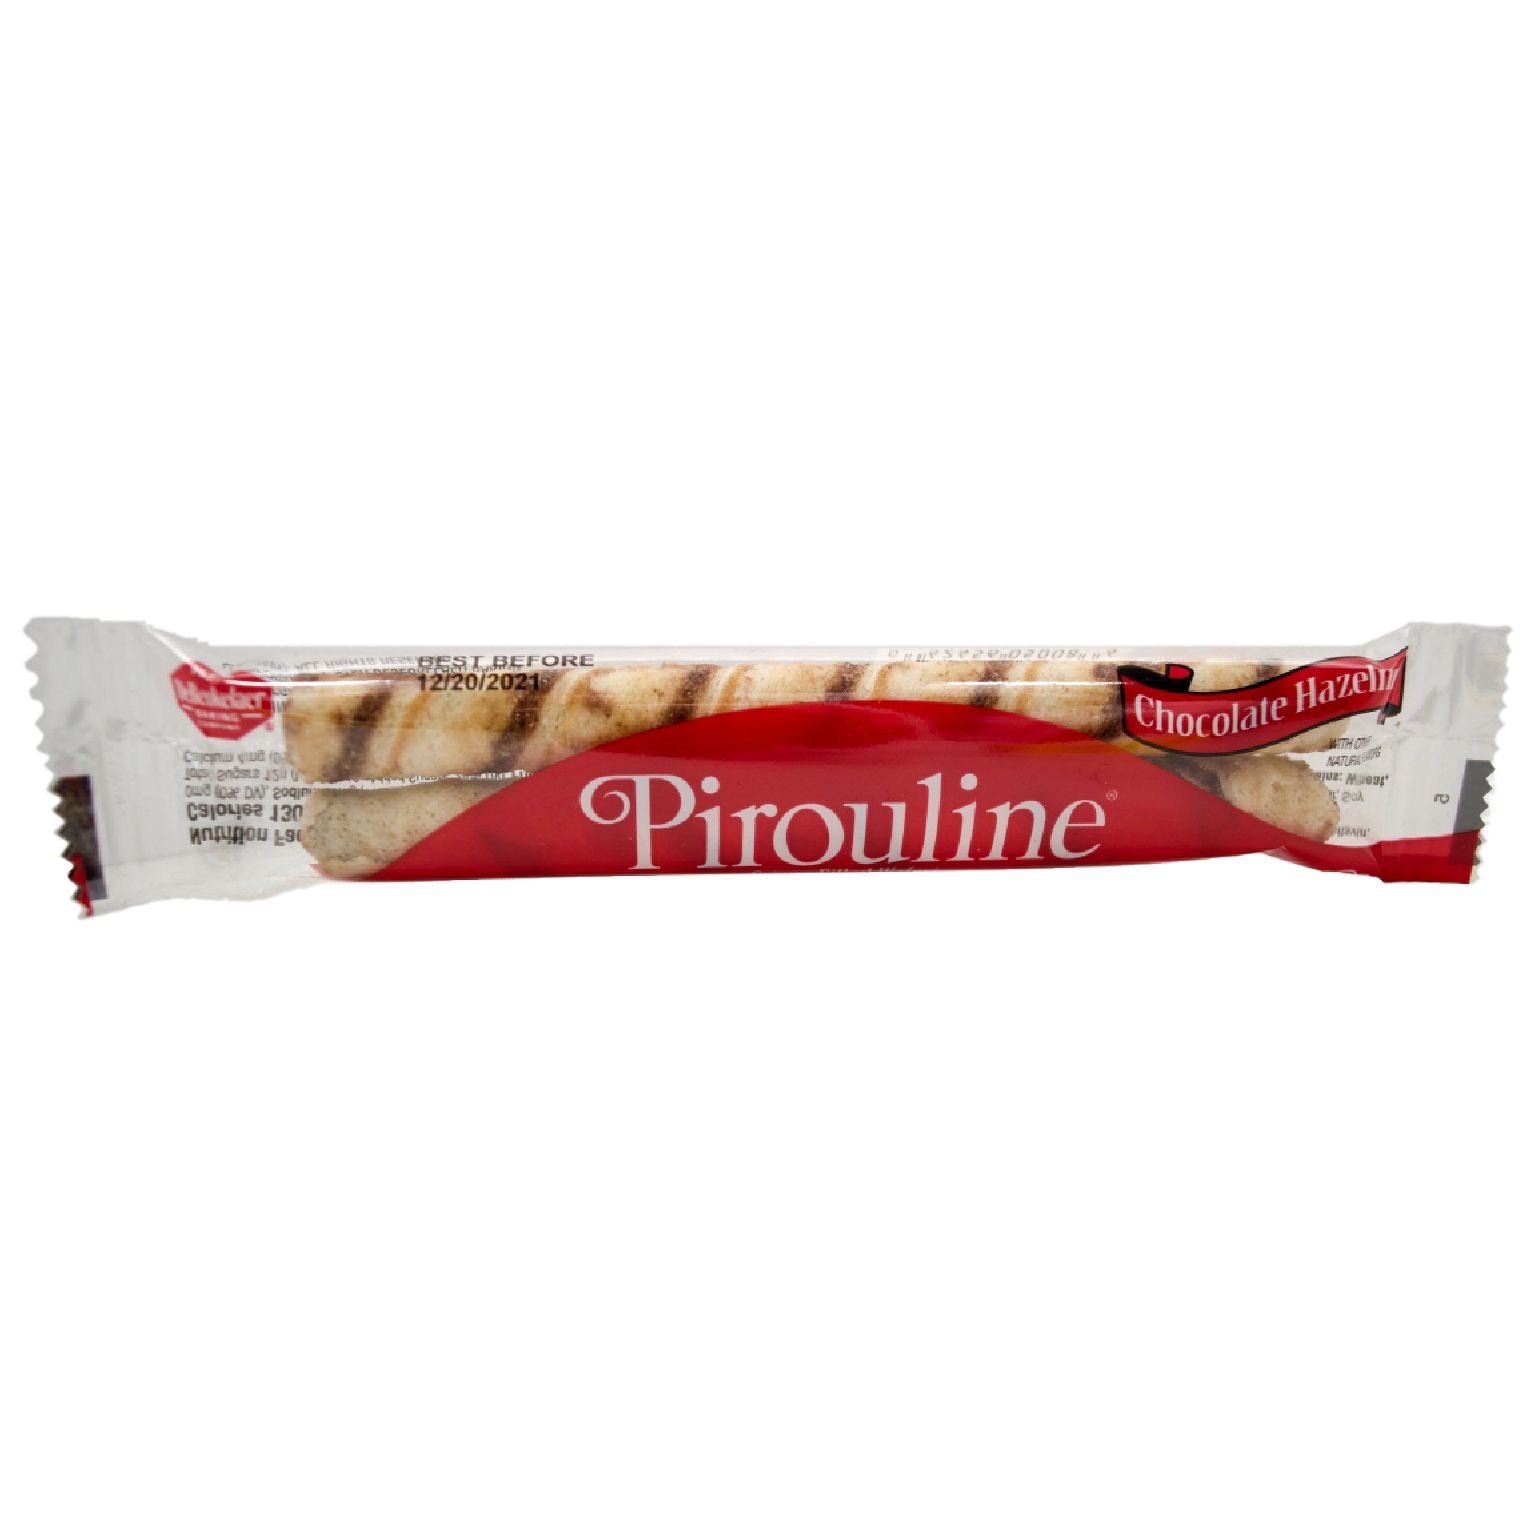 Pirouline Chocolate Wafer Rolls